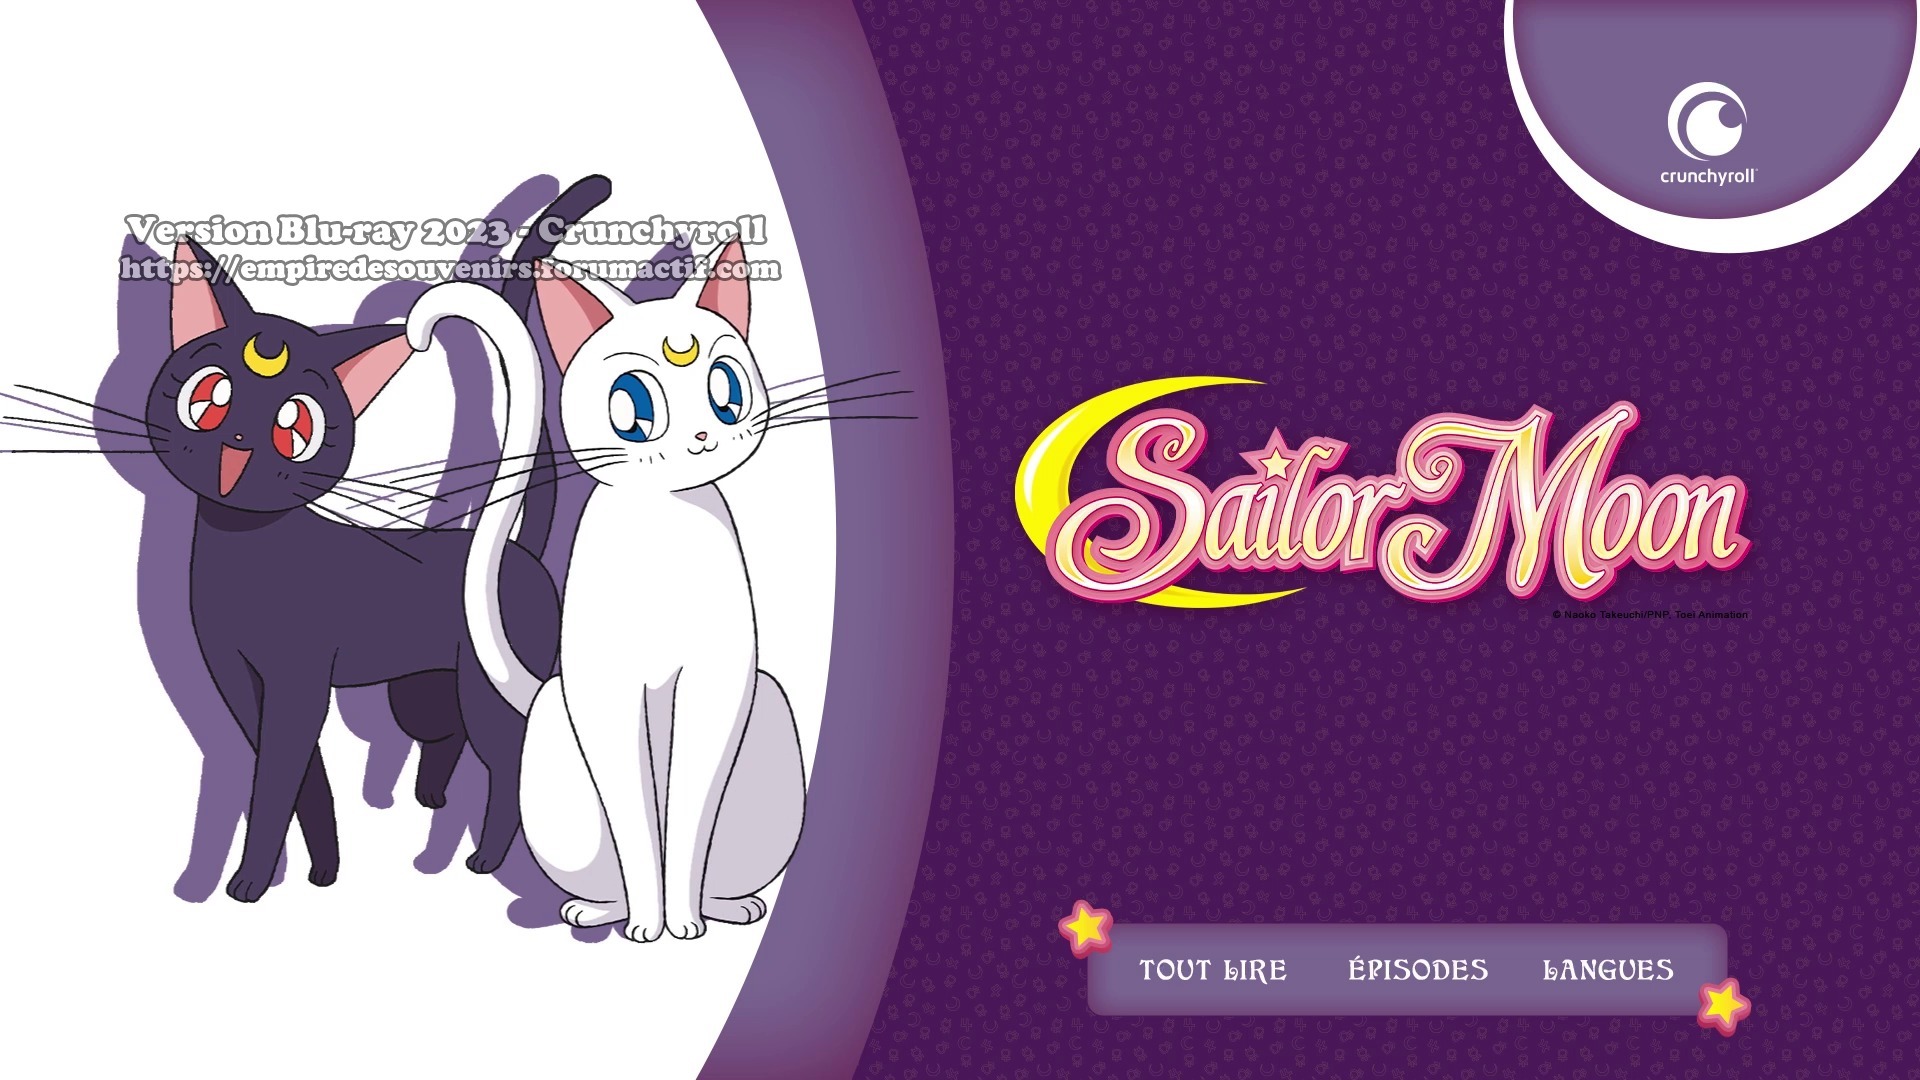 Critique Blu-ray - Sailor Moon - Crunchyroll Uggl